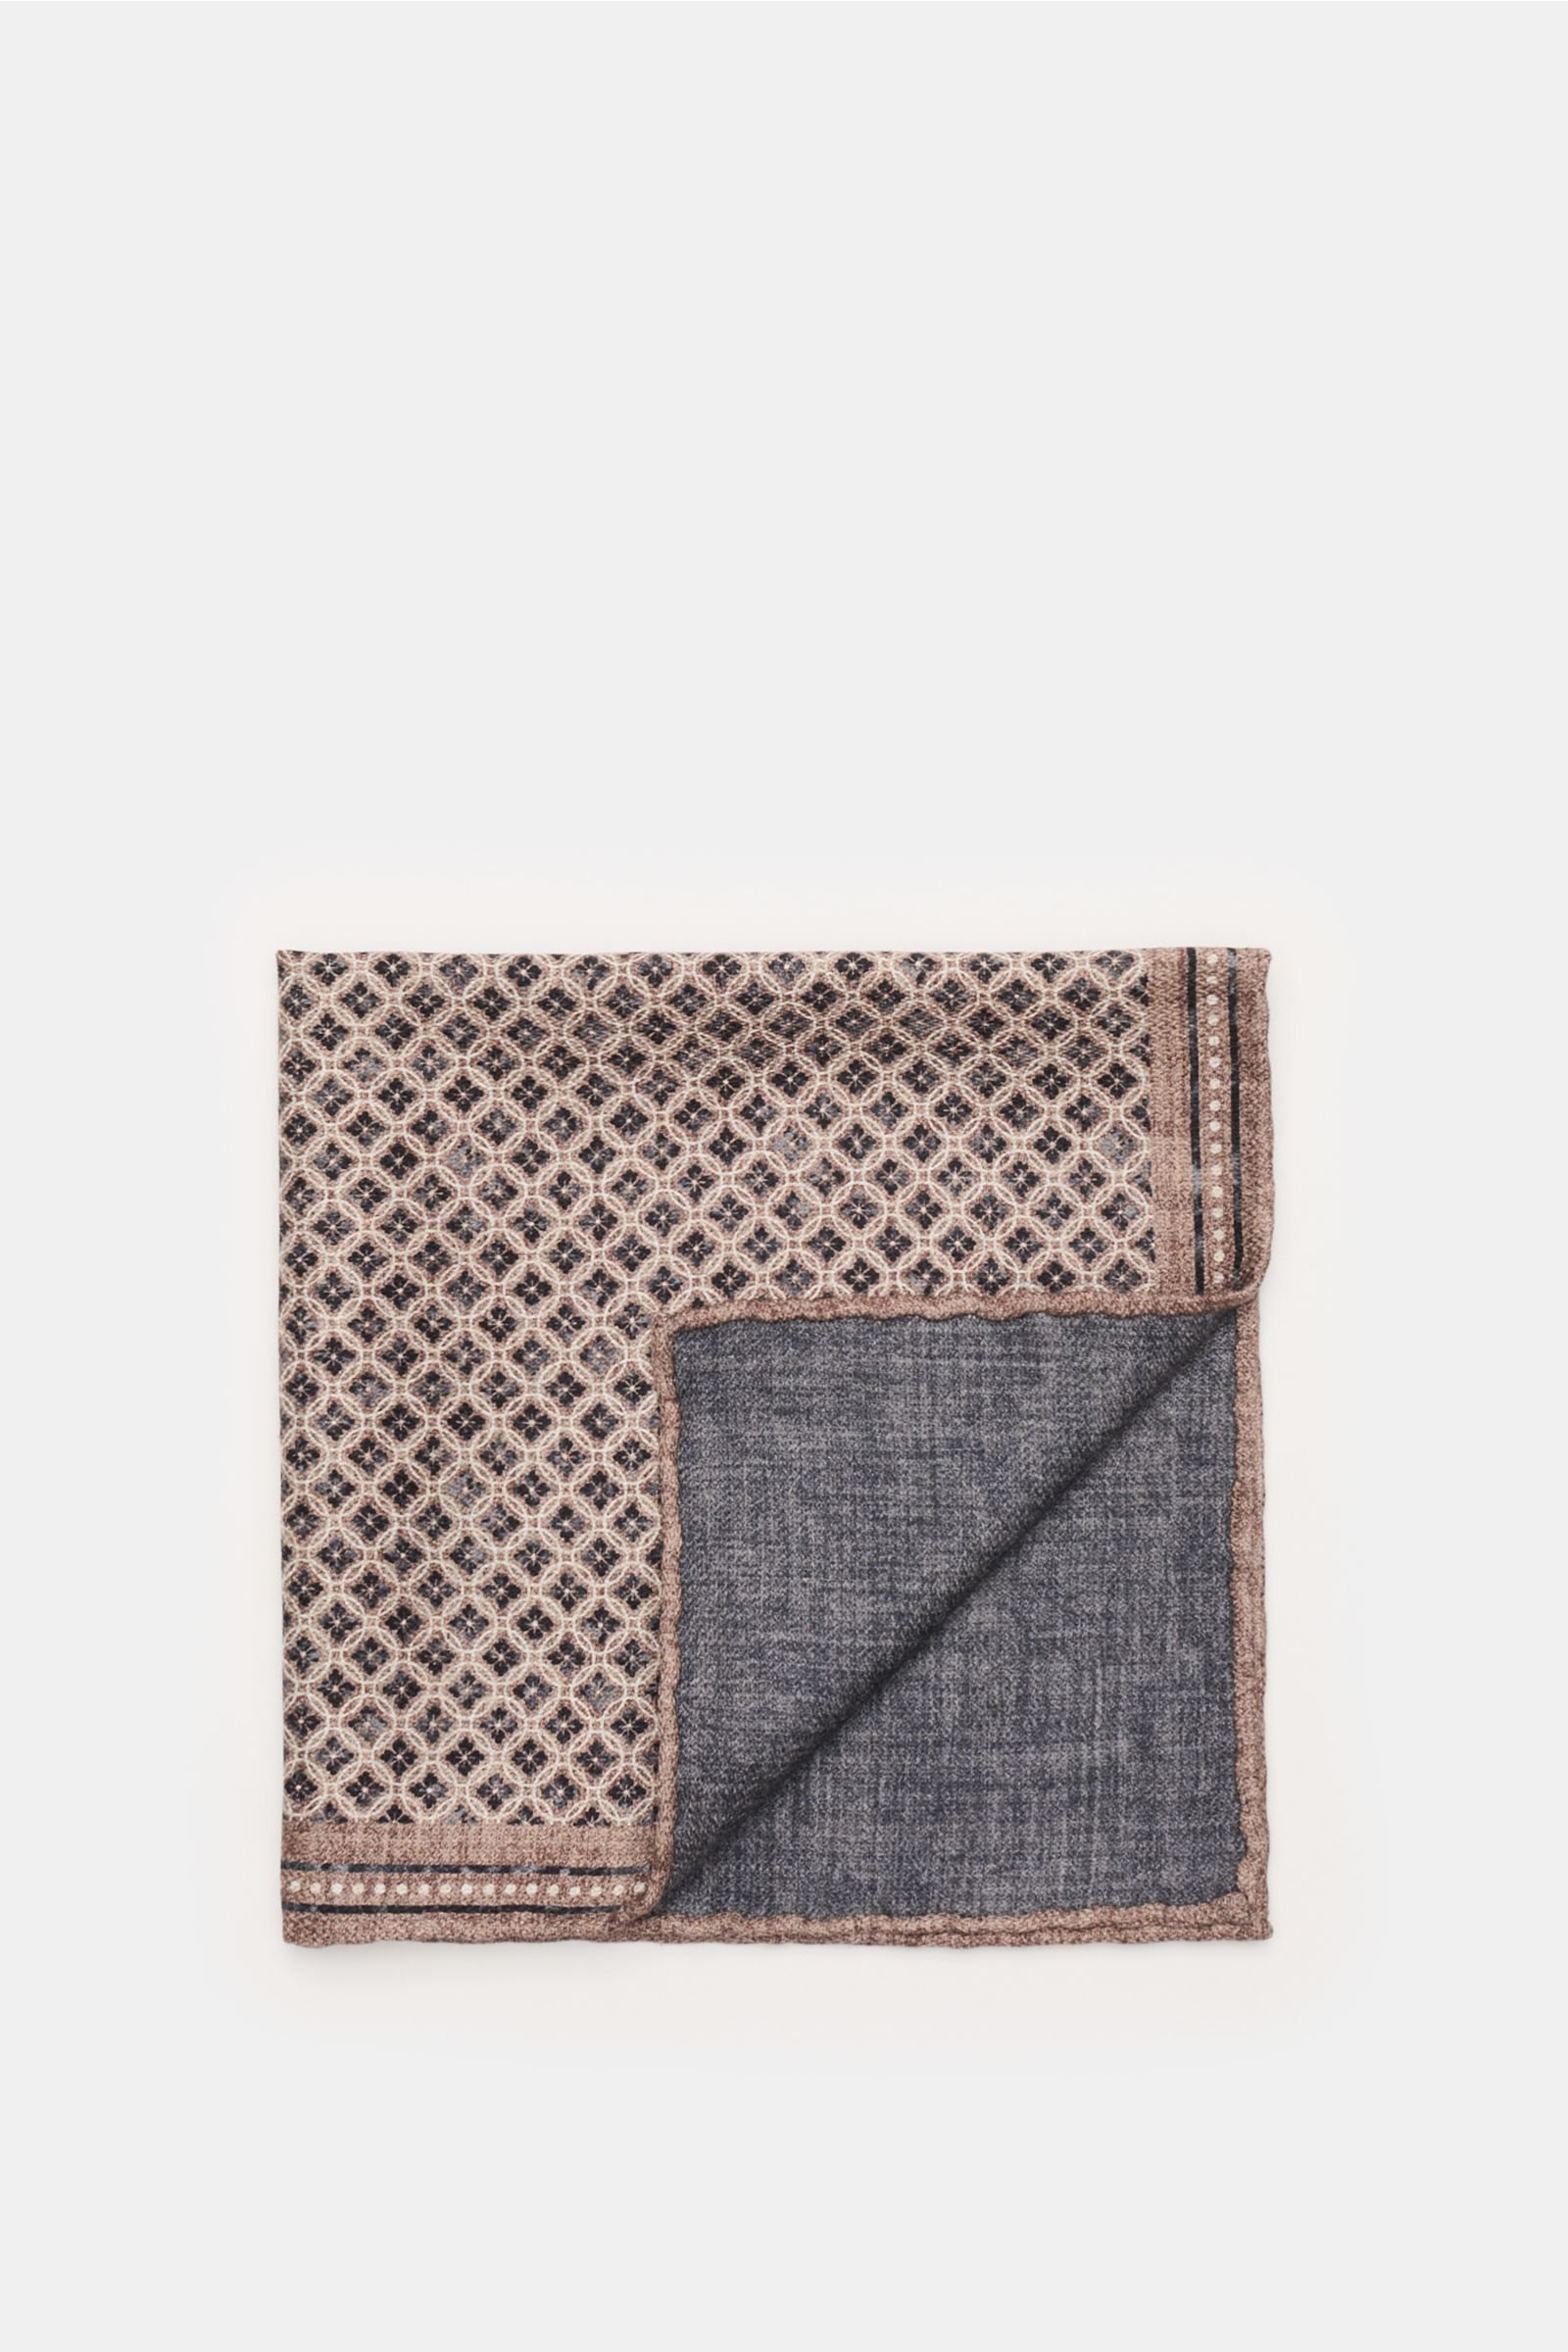 Pocket square grey-brown/dark grey patterned